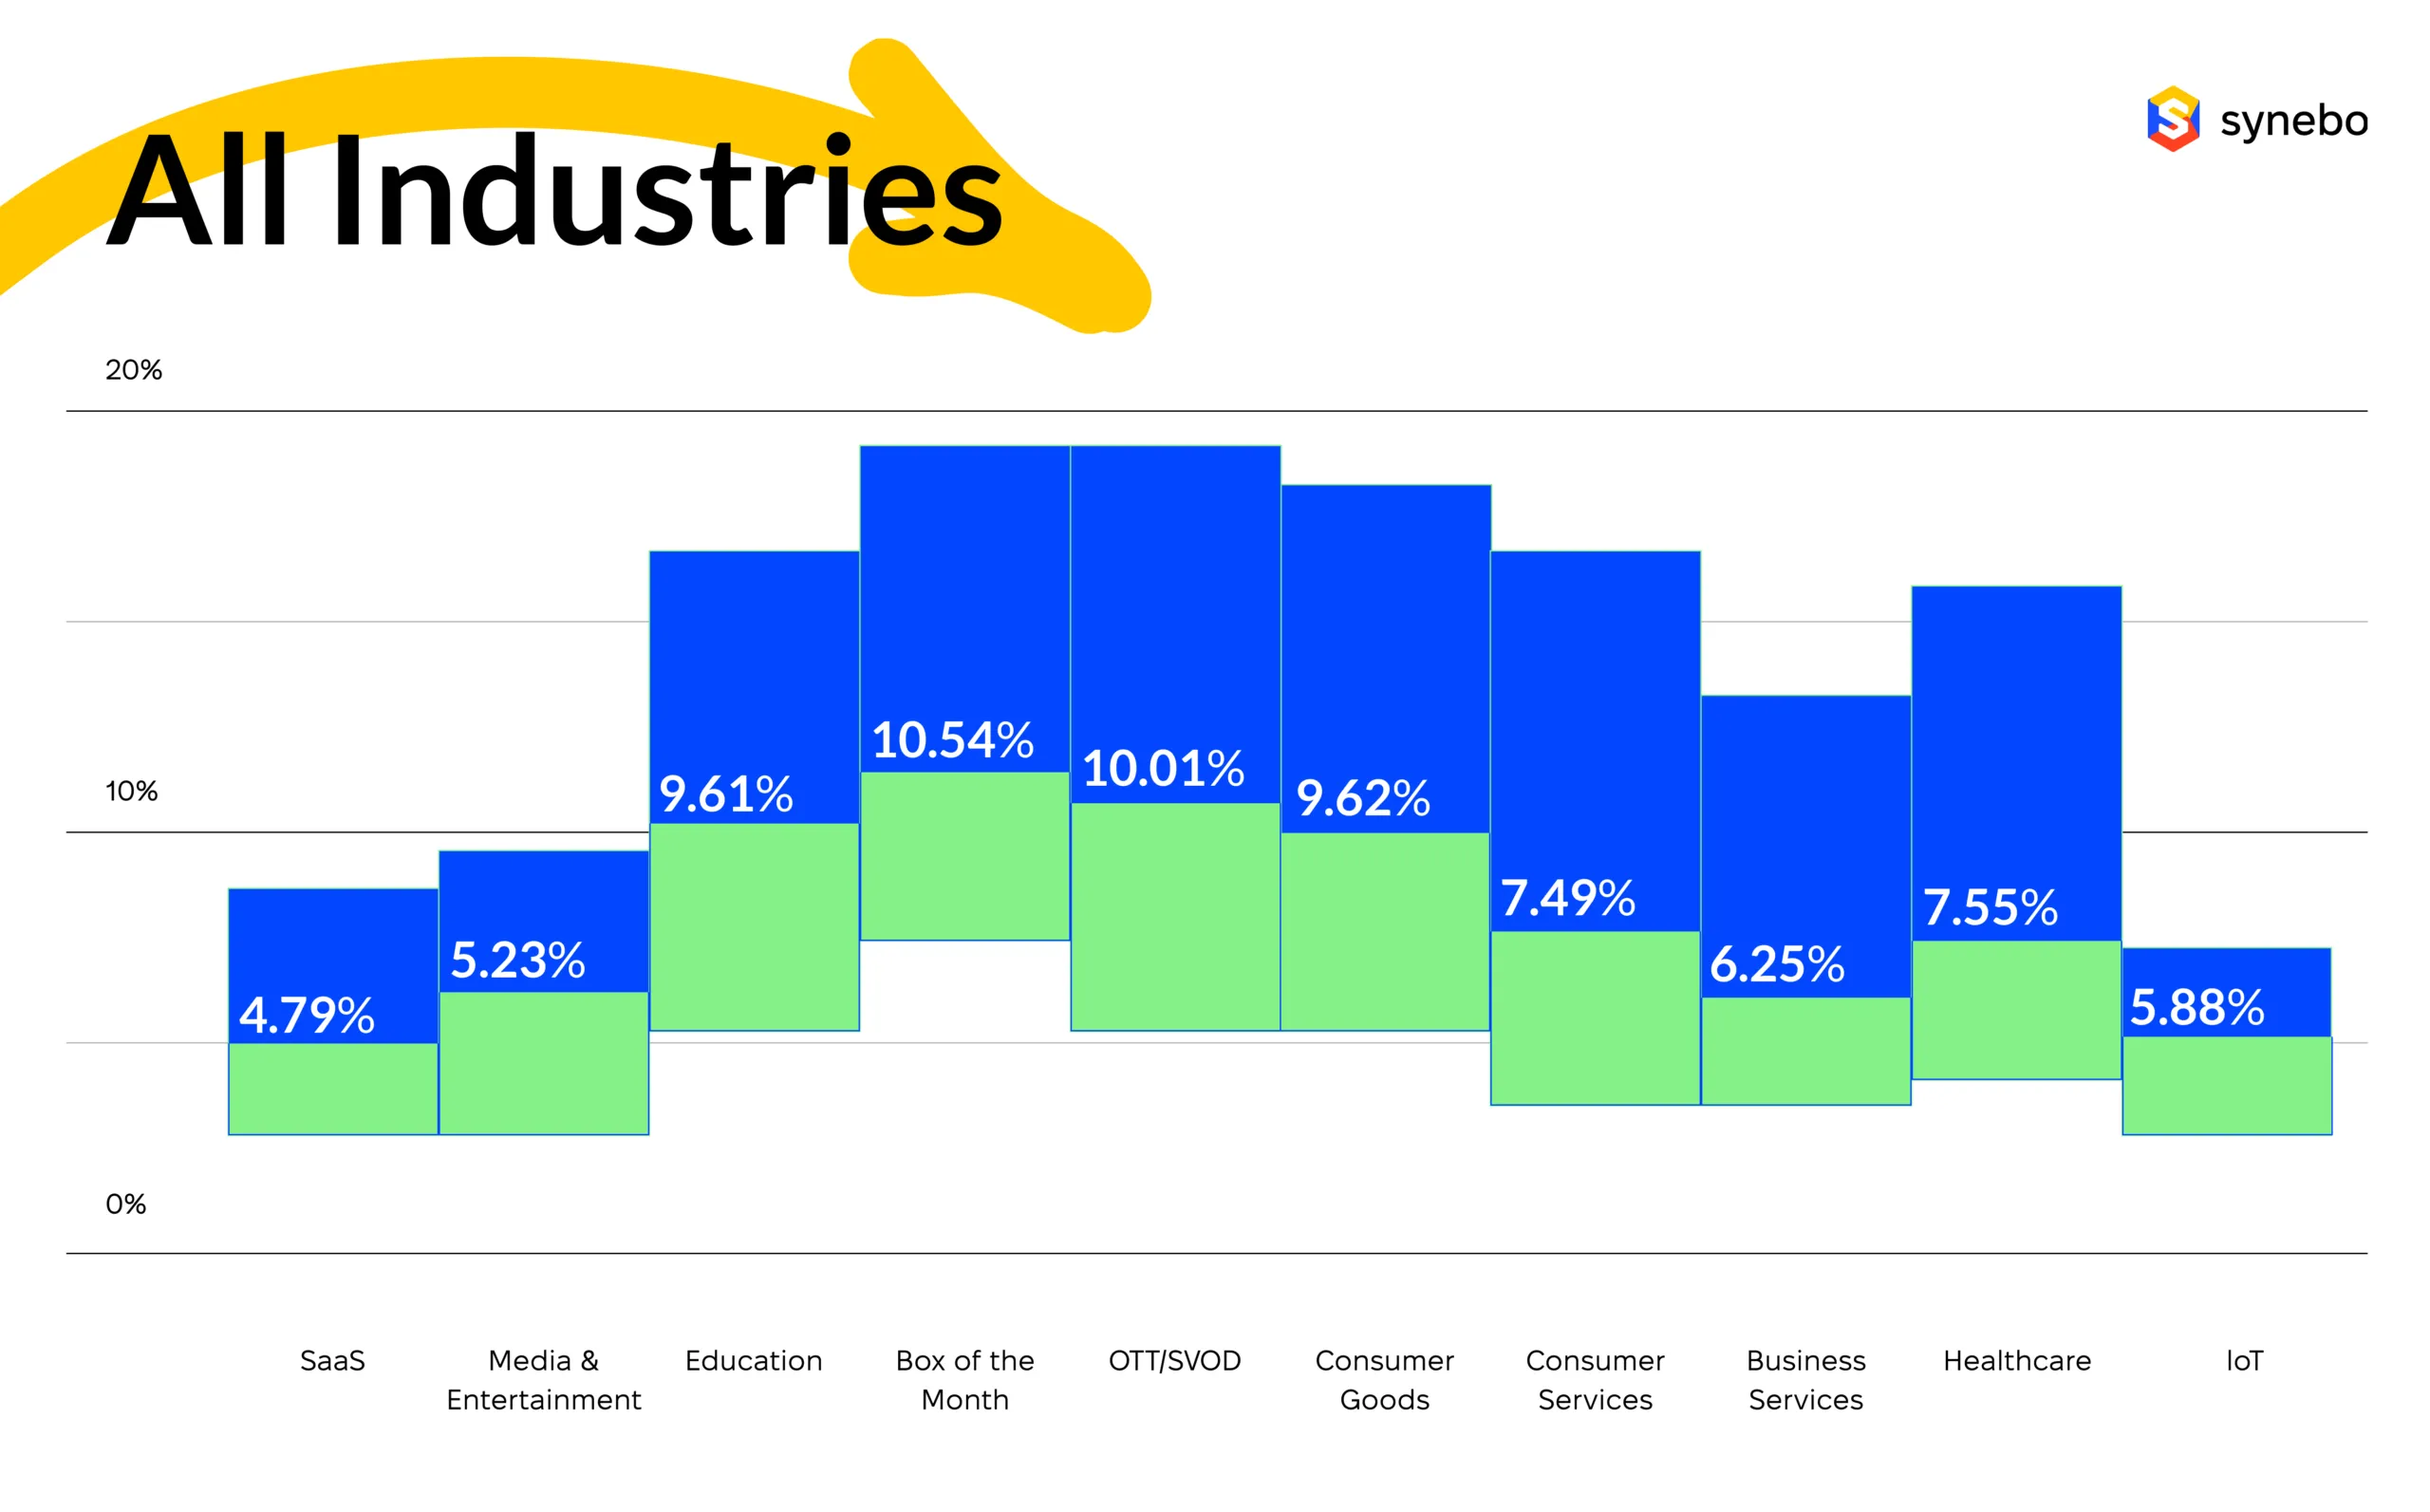 Churn rates across industries